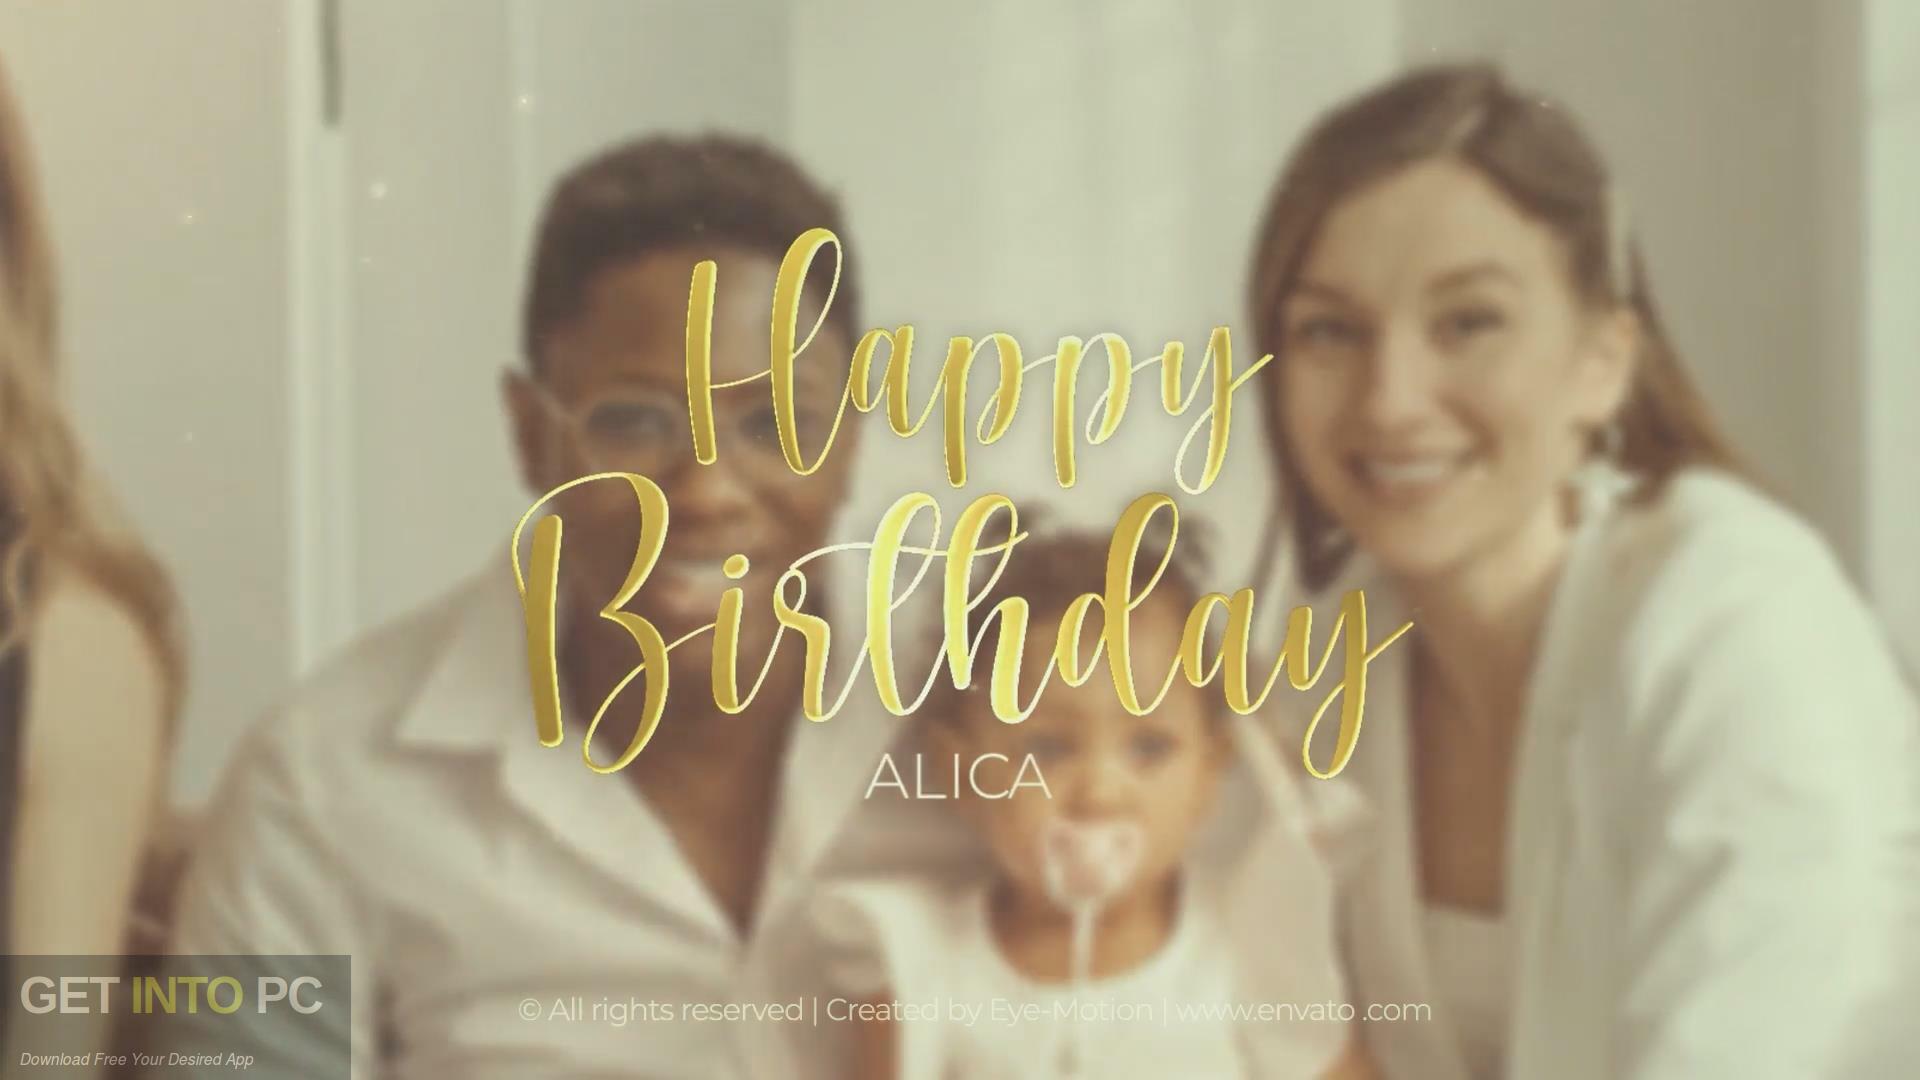 VideoHive - Photo Slideshow Happy Birthday [AEP] Free Download